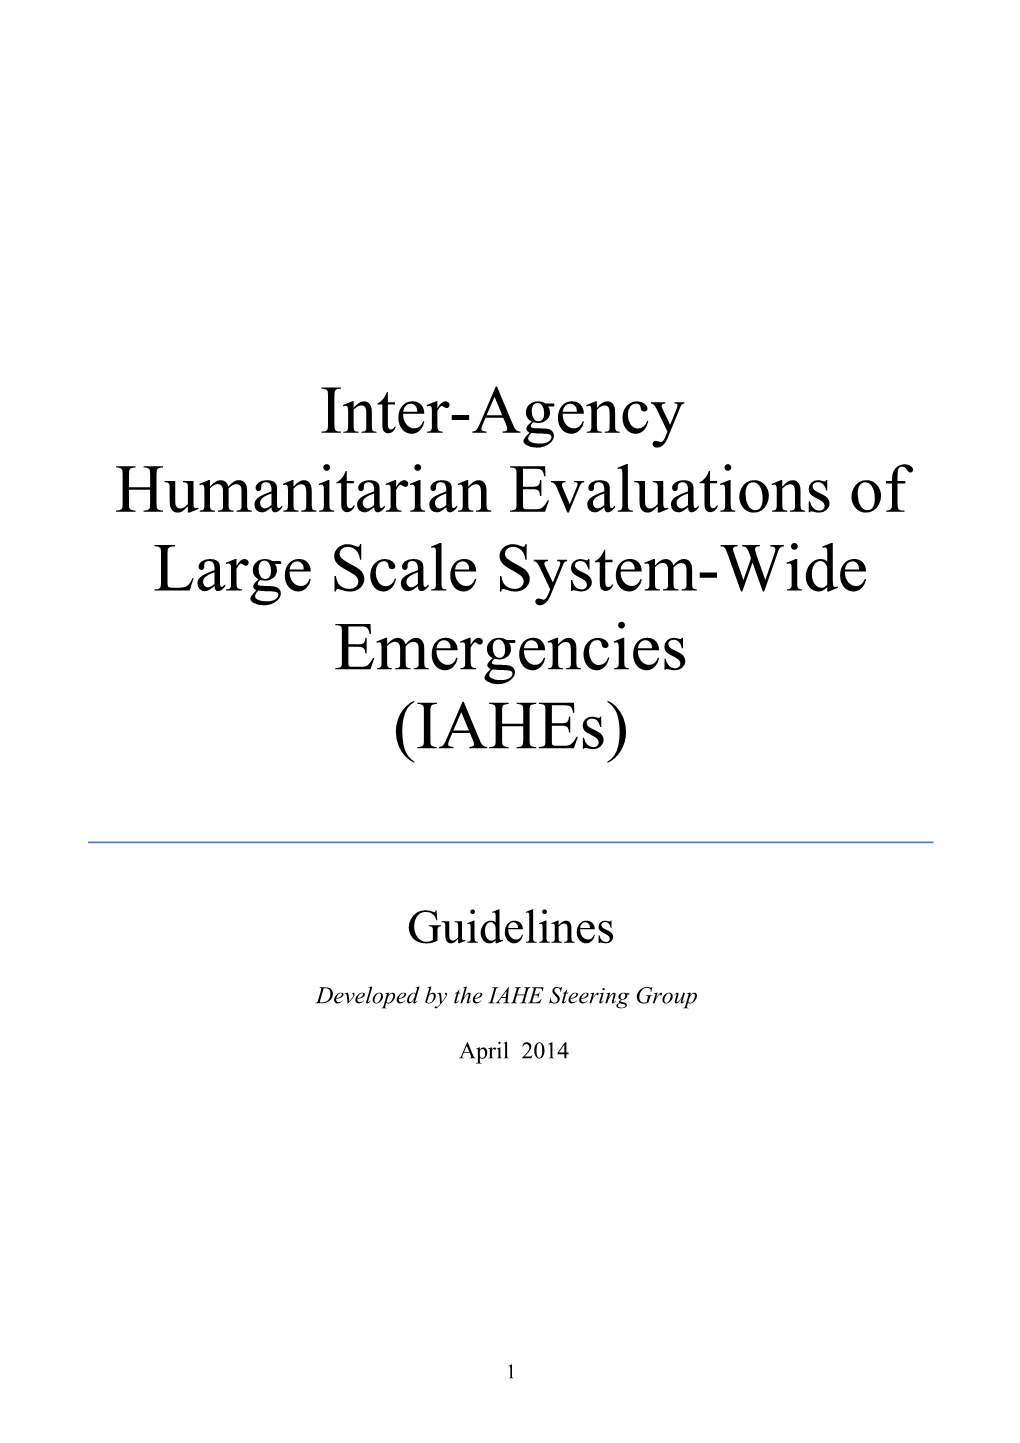 Conducting Inter-Agency Humanitarian Evaluations